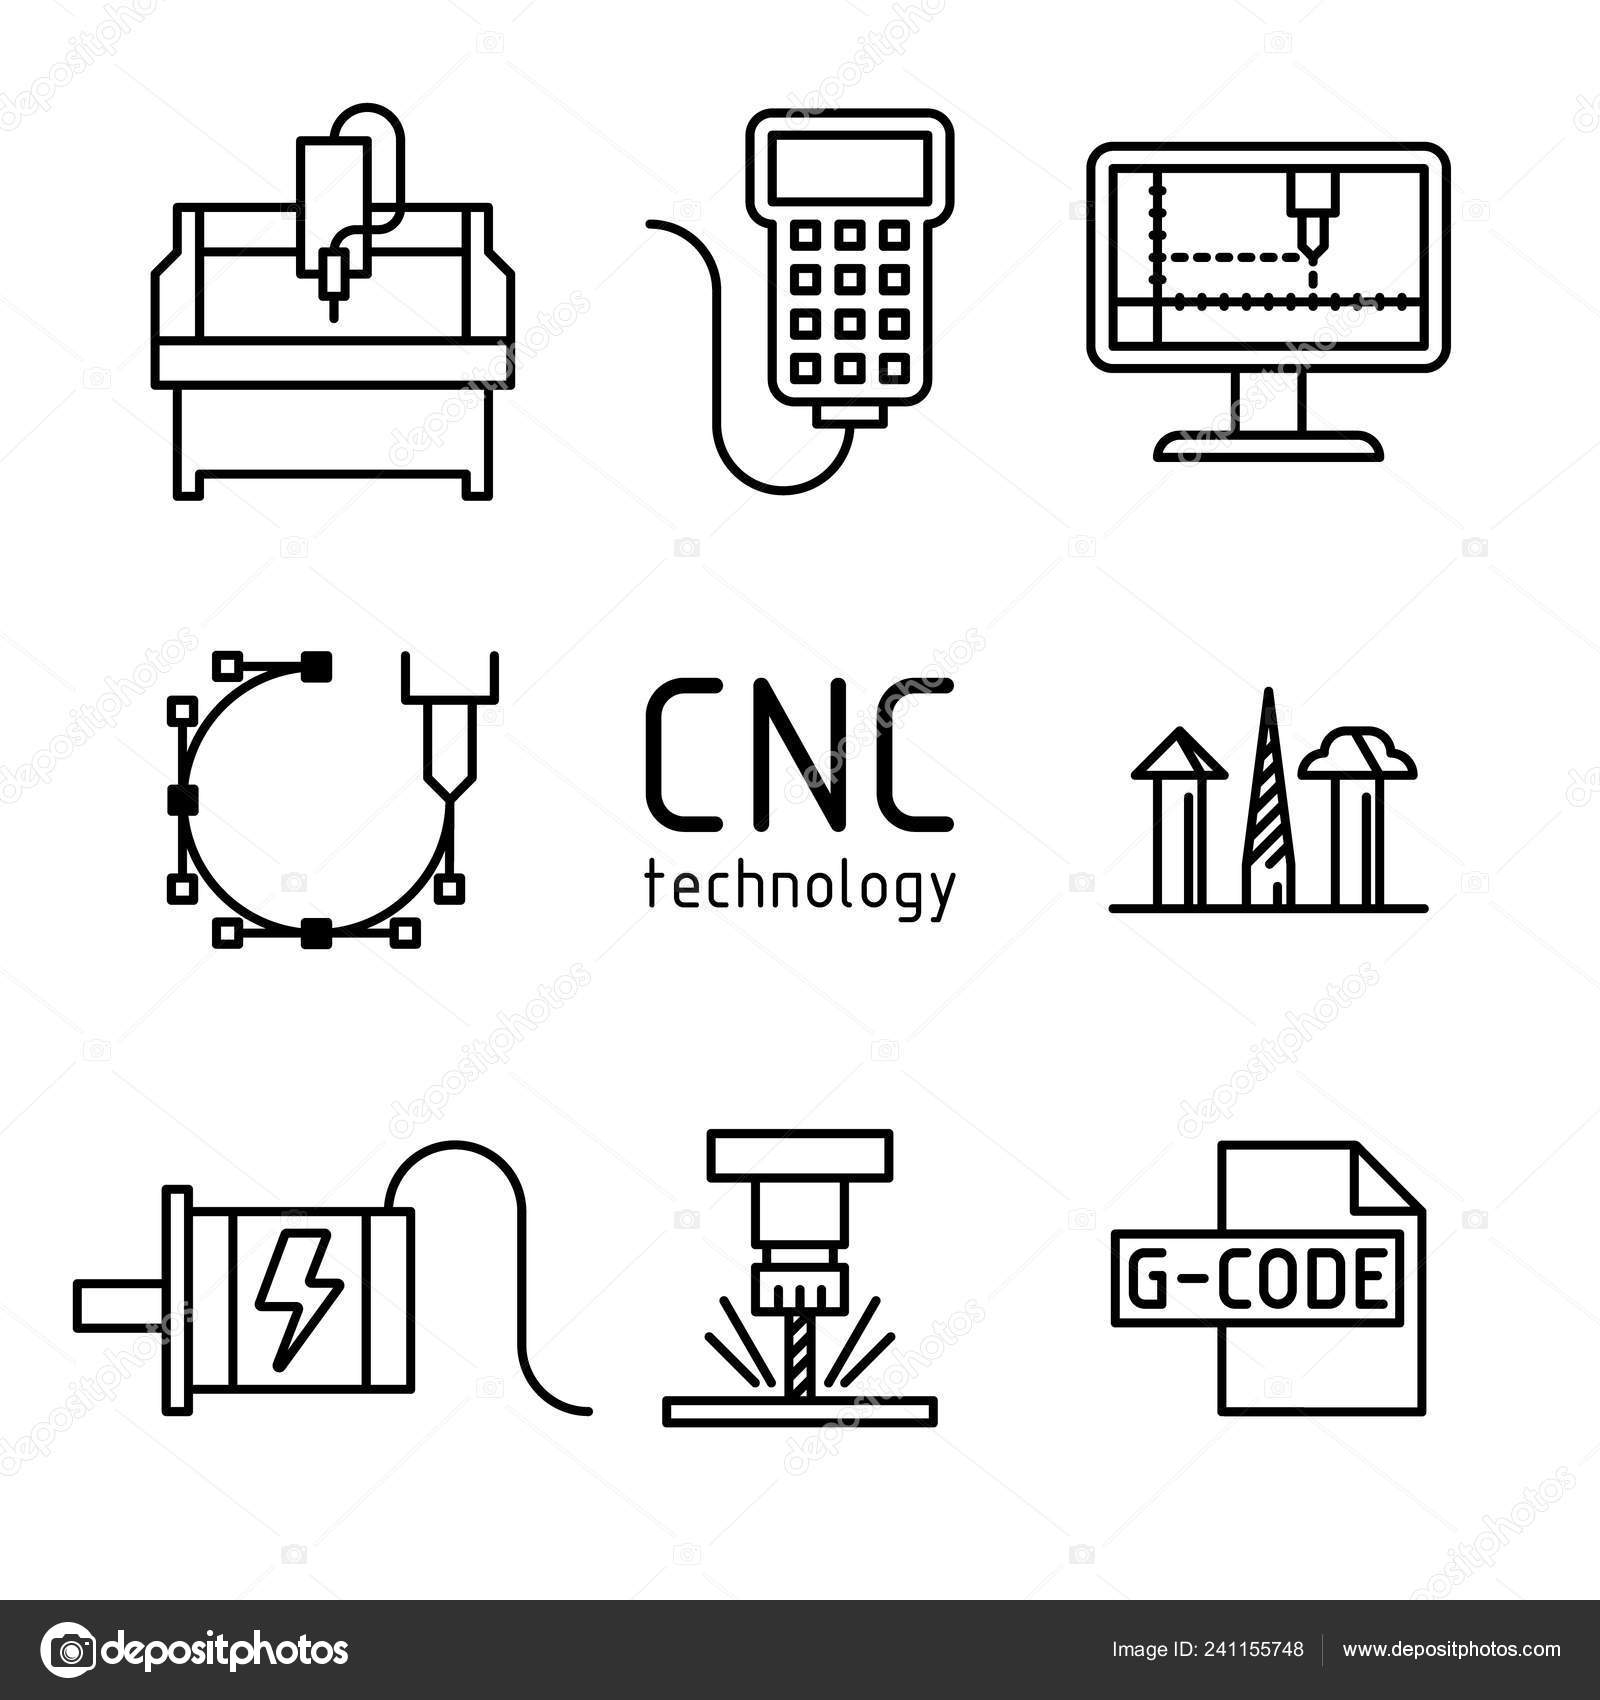 Maquina cnc imágenes de stock de arte vectorial | Depositphotos